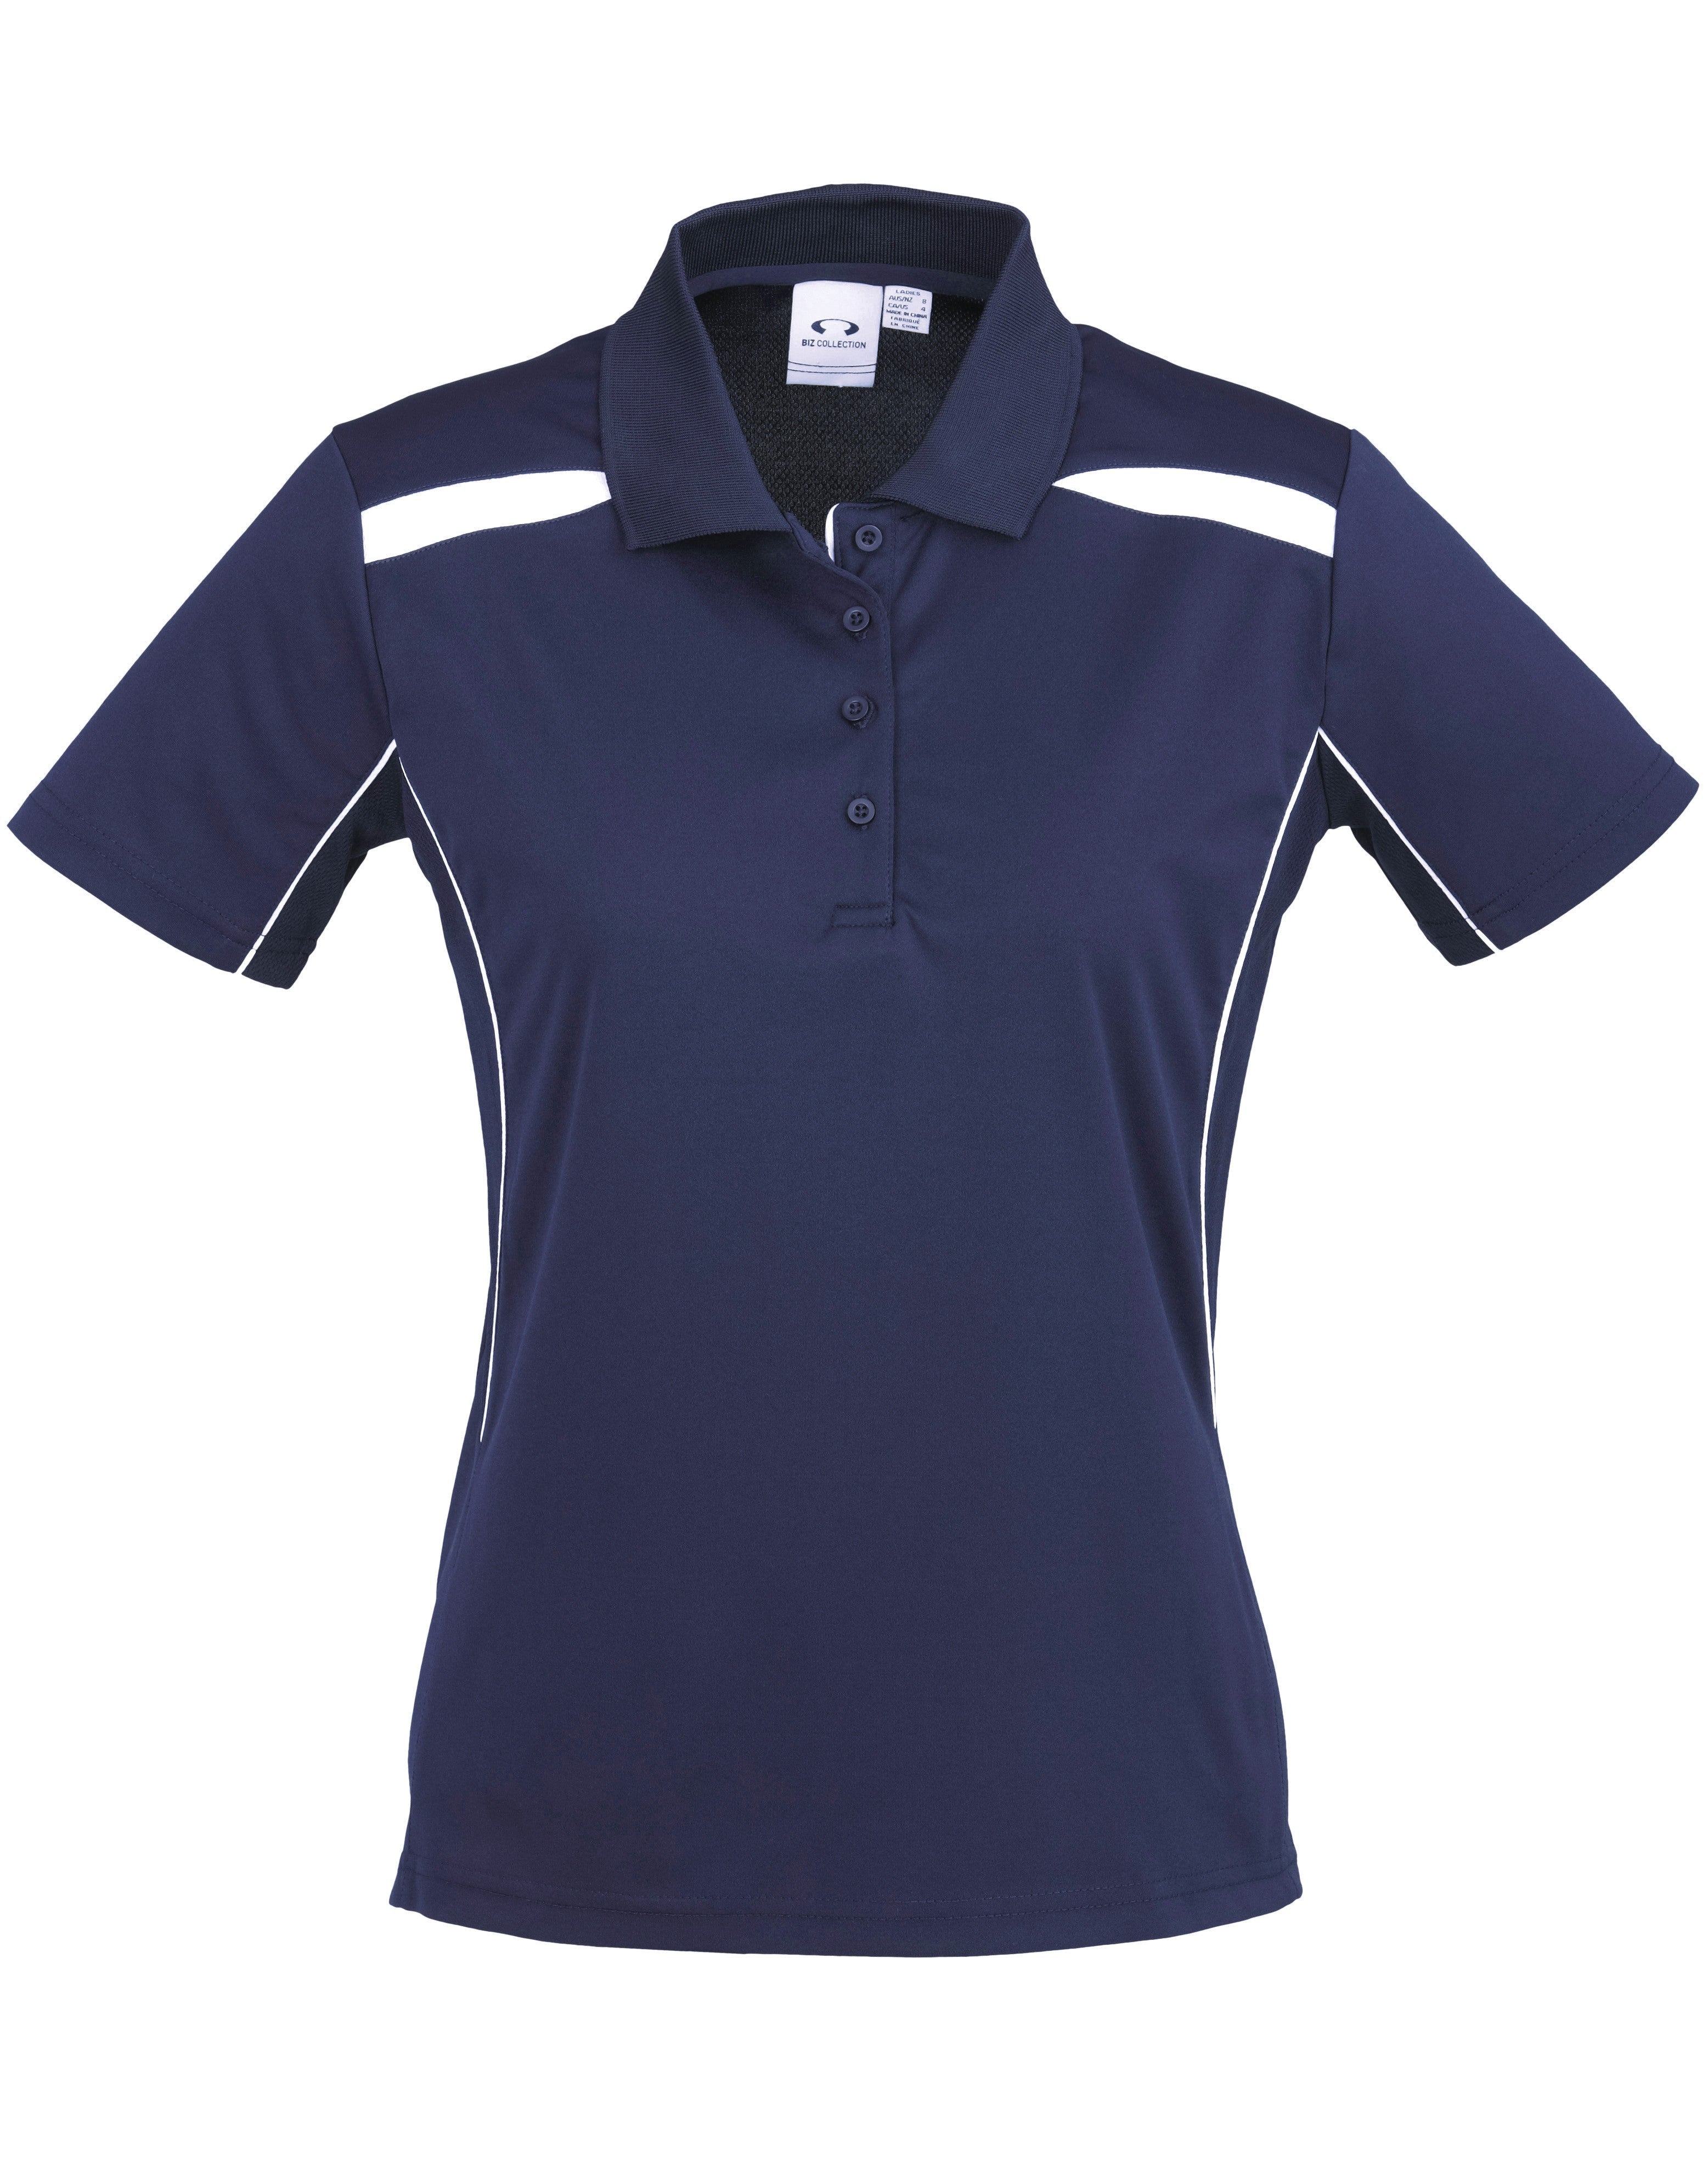 Ladies United Golf Shirt - White Navy Only-L-Navy-N